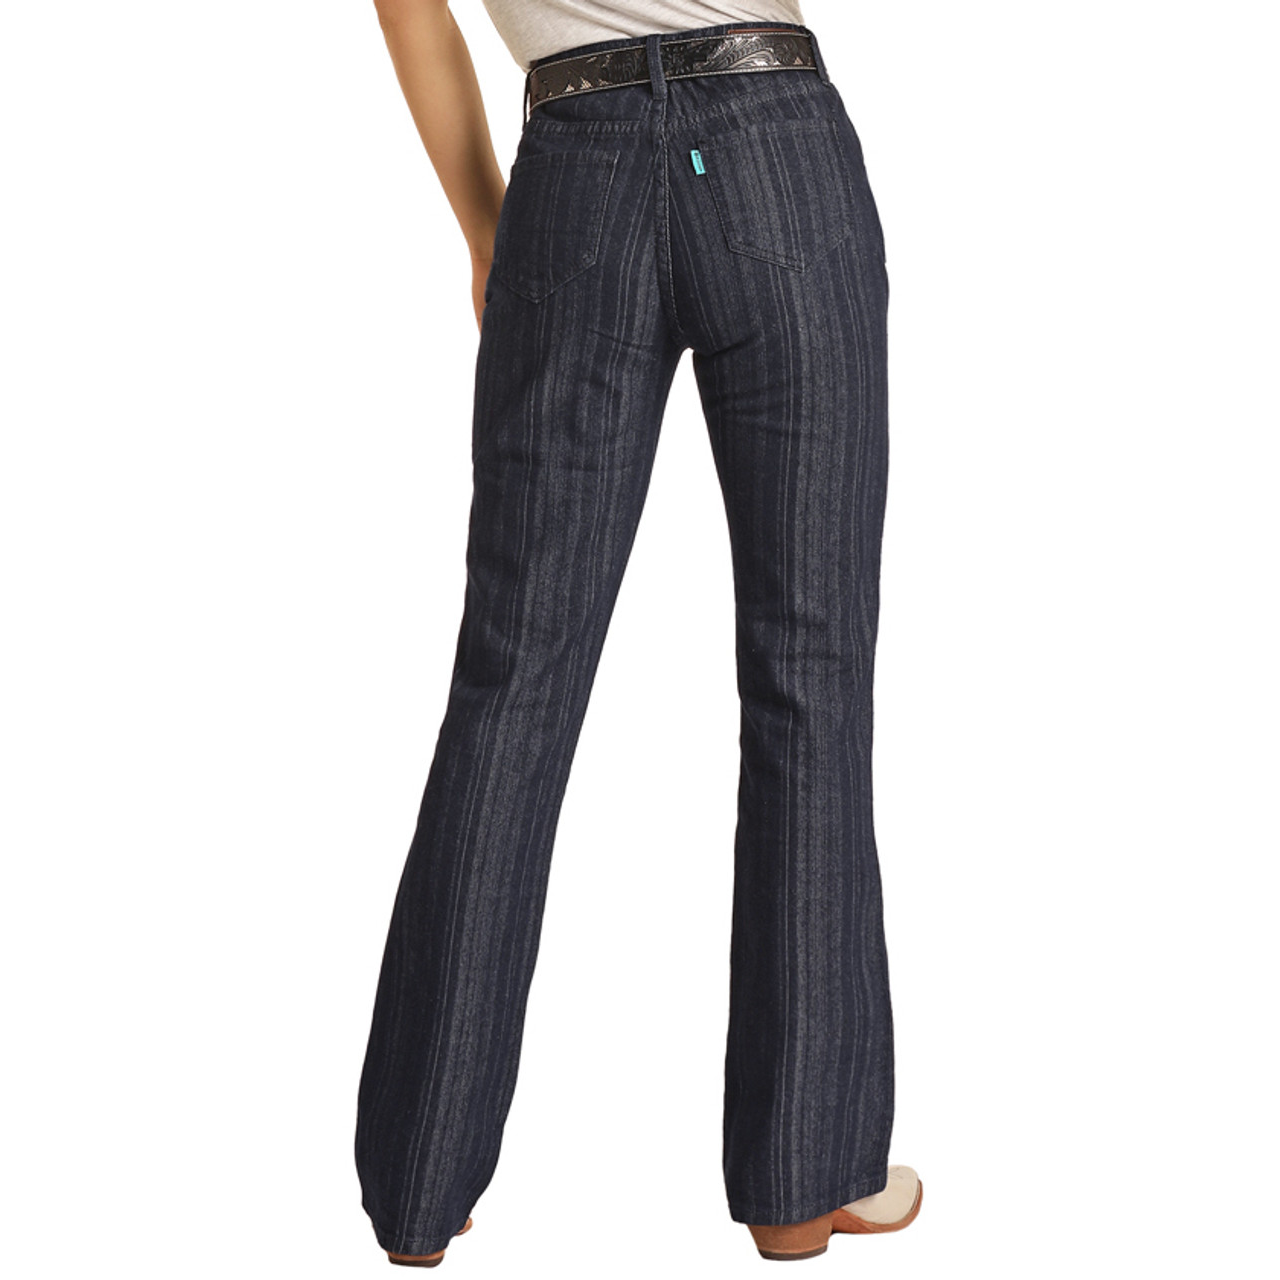 Hooey Womens Jaquard Stripe High Rise Bootcut Jeans - Medium Wash